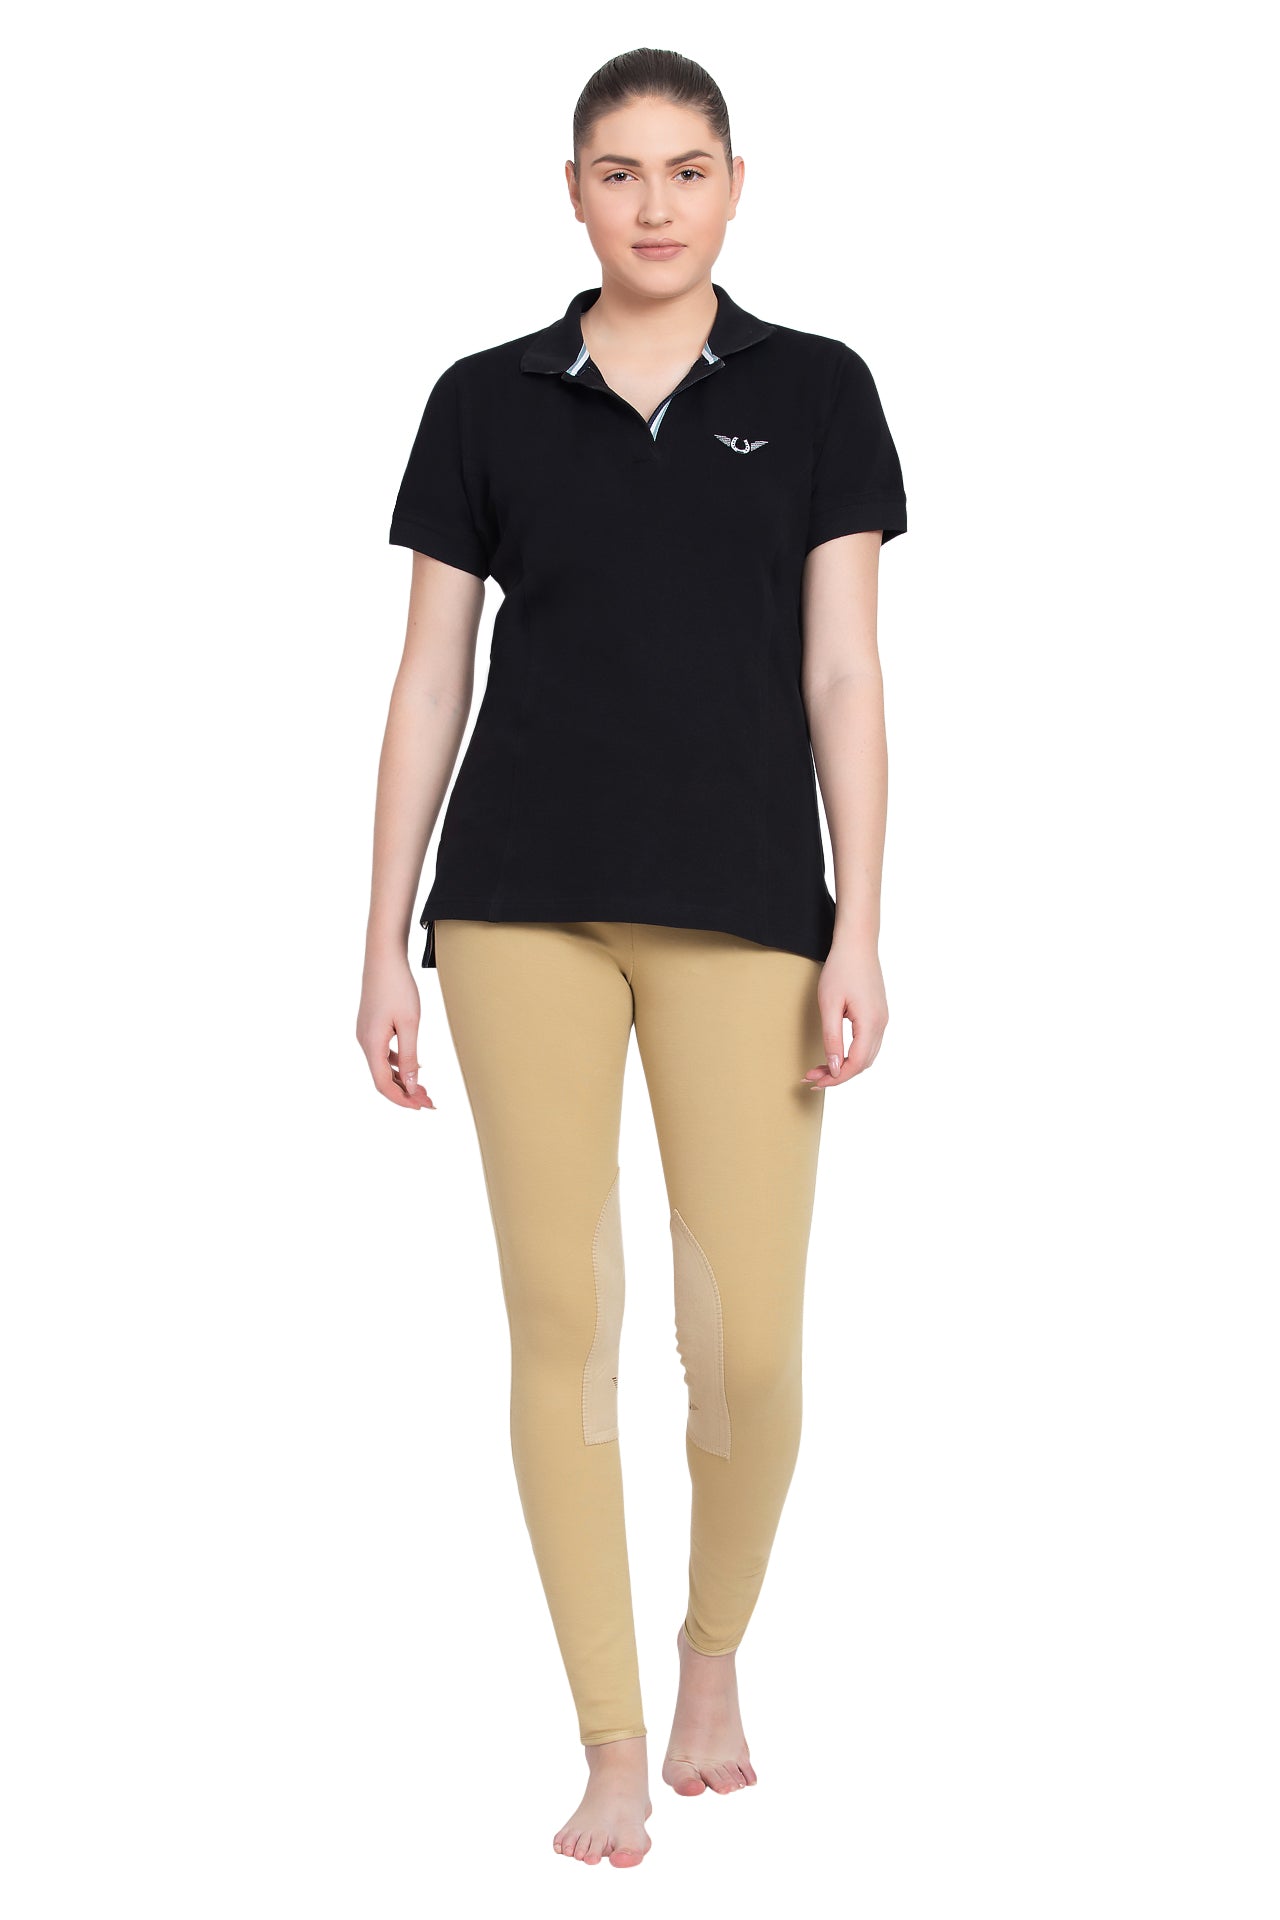 TuffRider Ladies Polo Sport Shirt - Breeches.com